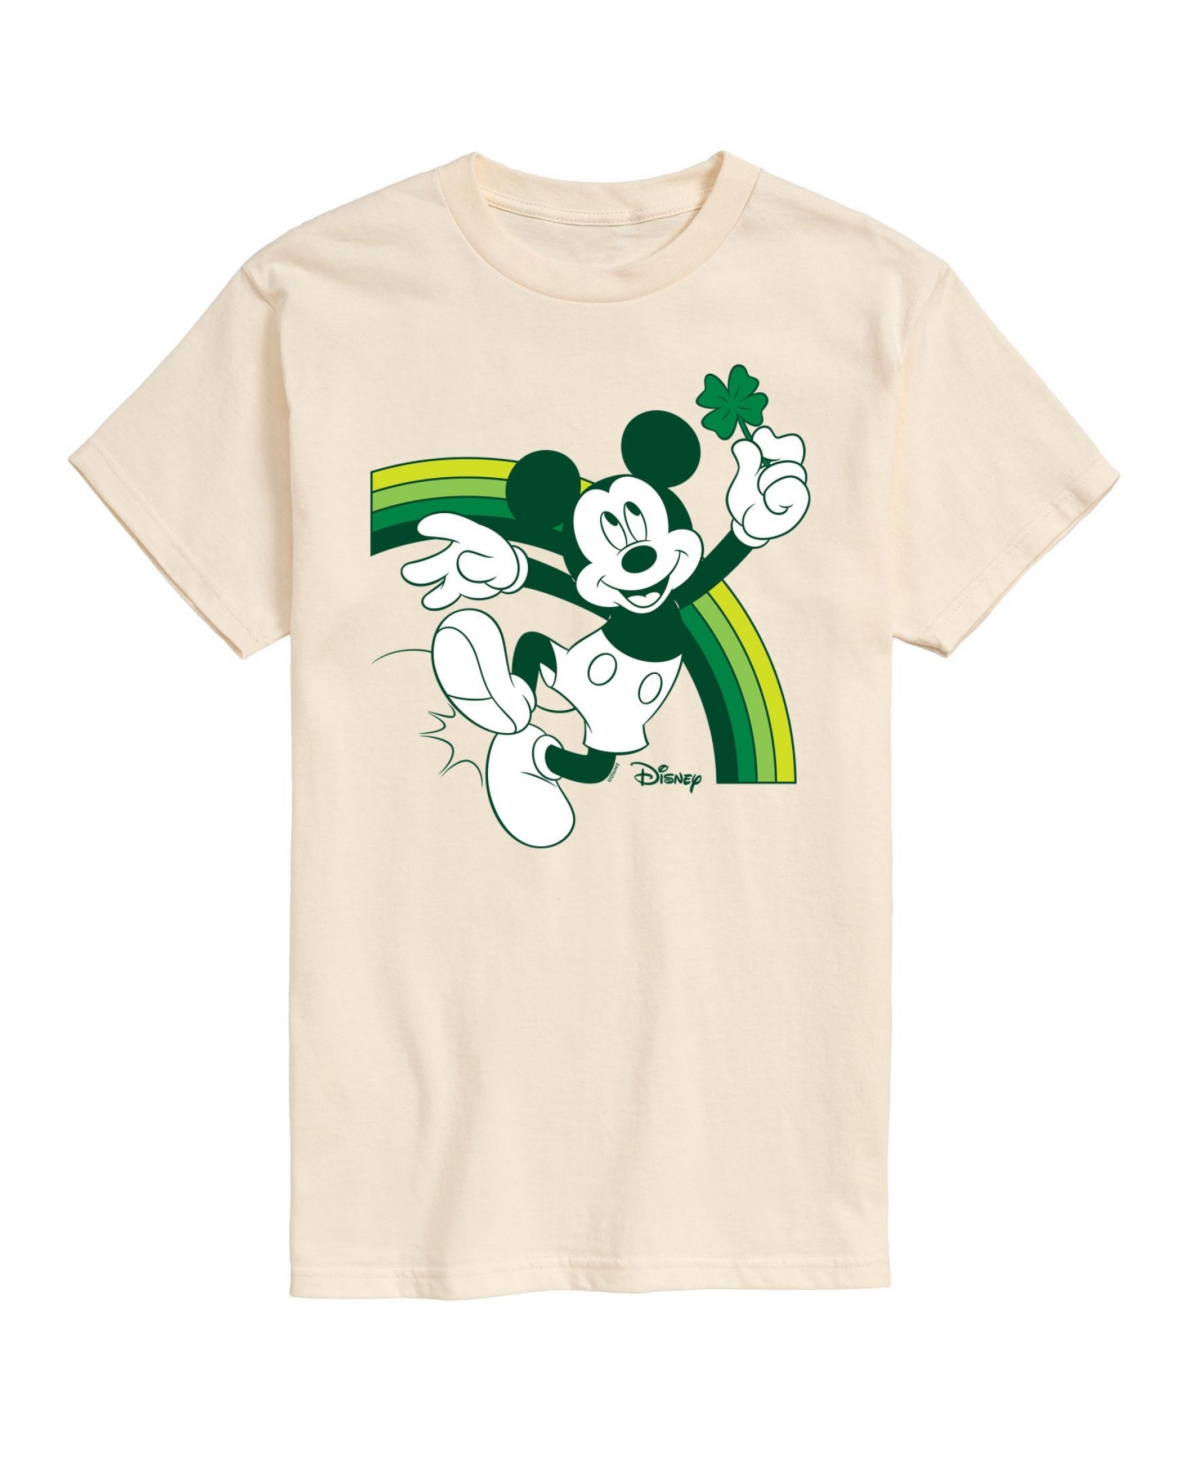 Men's Disney Standard Short Sleeve T-shirts - White